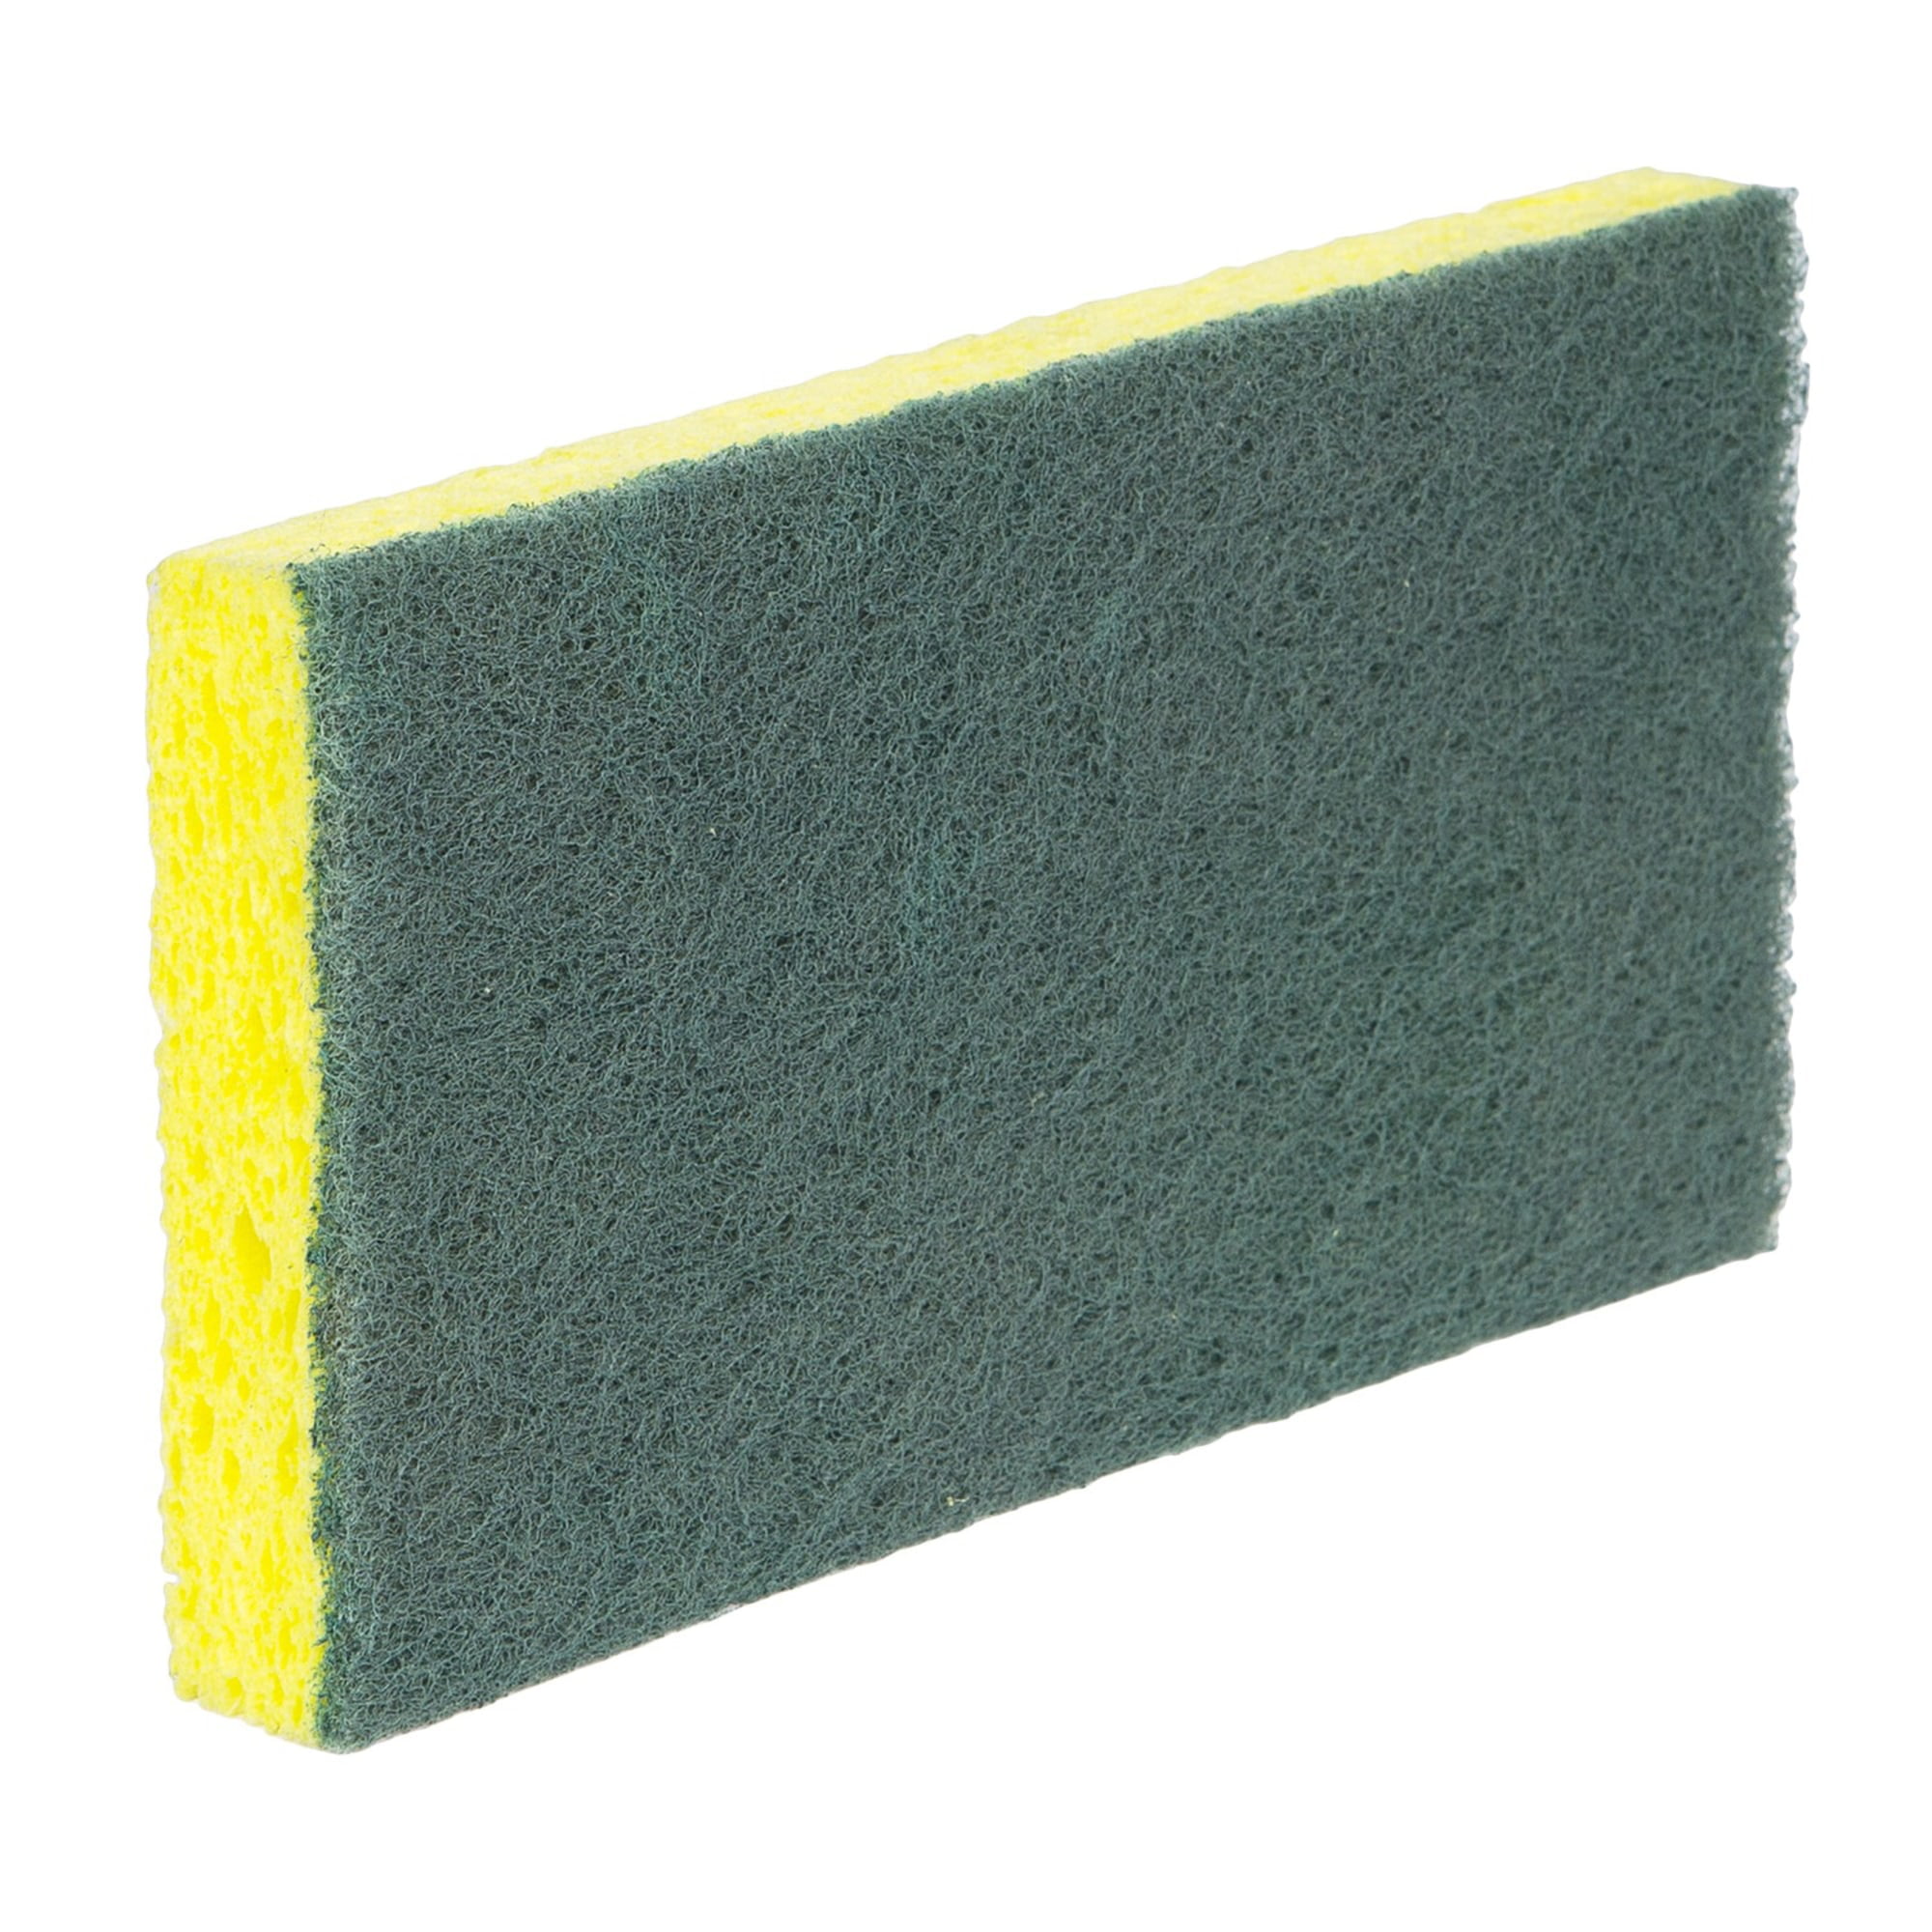 Schorin Company  Green & Yellow Cellulose Scrub Sponge 6.25x3.25 -  Schorin Company